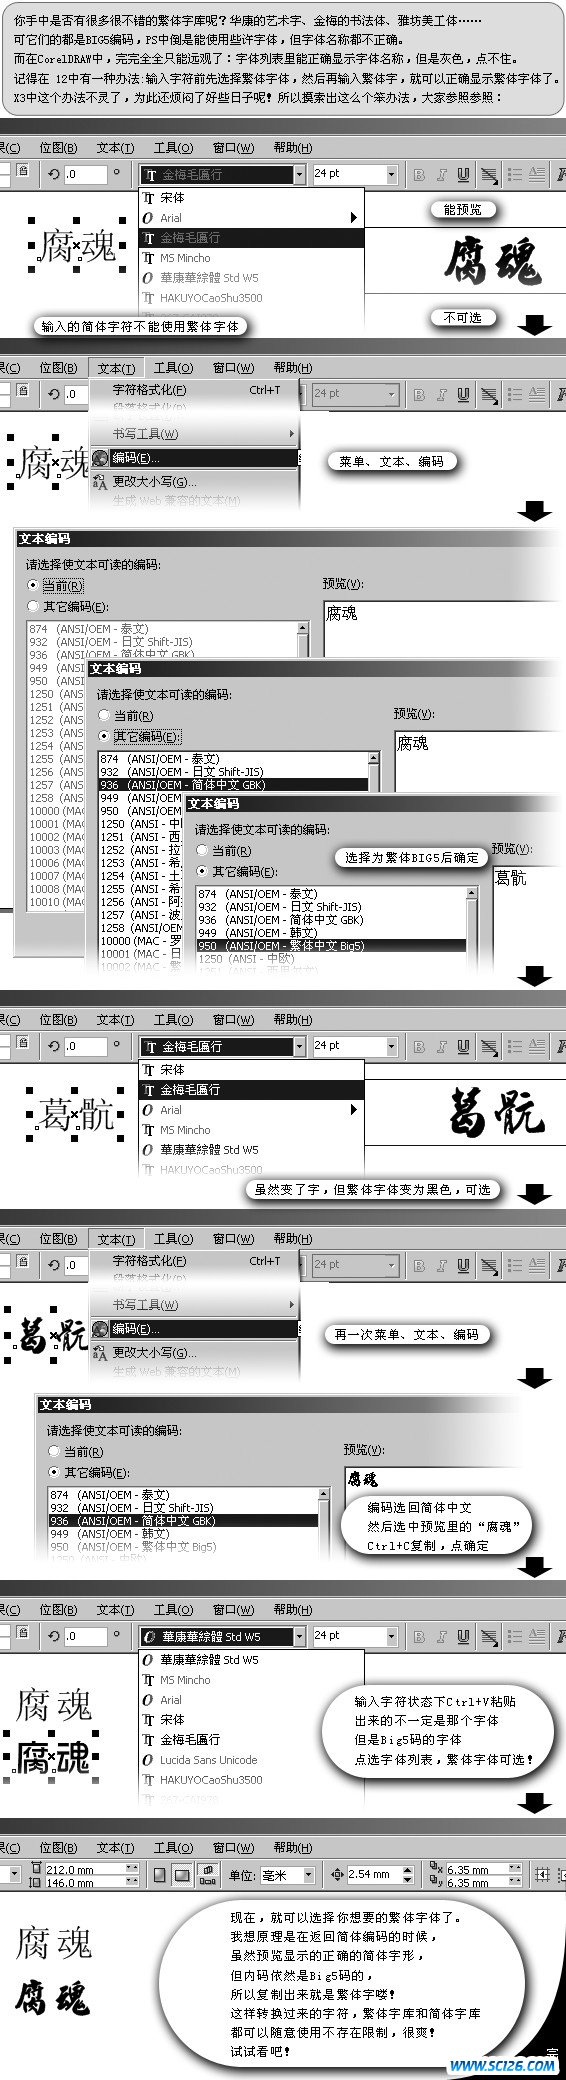 CorelDRAW X3中简体系统使用繁体字库